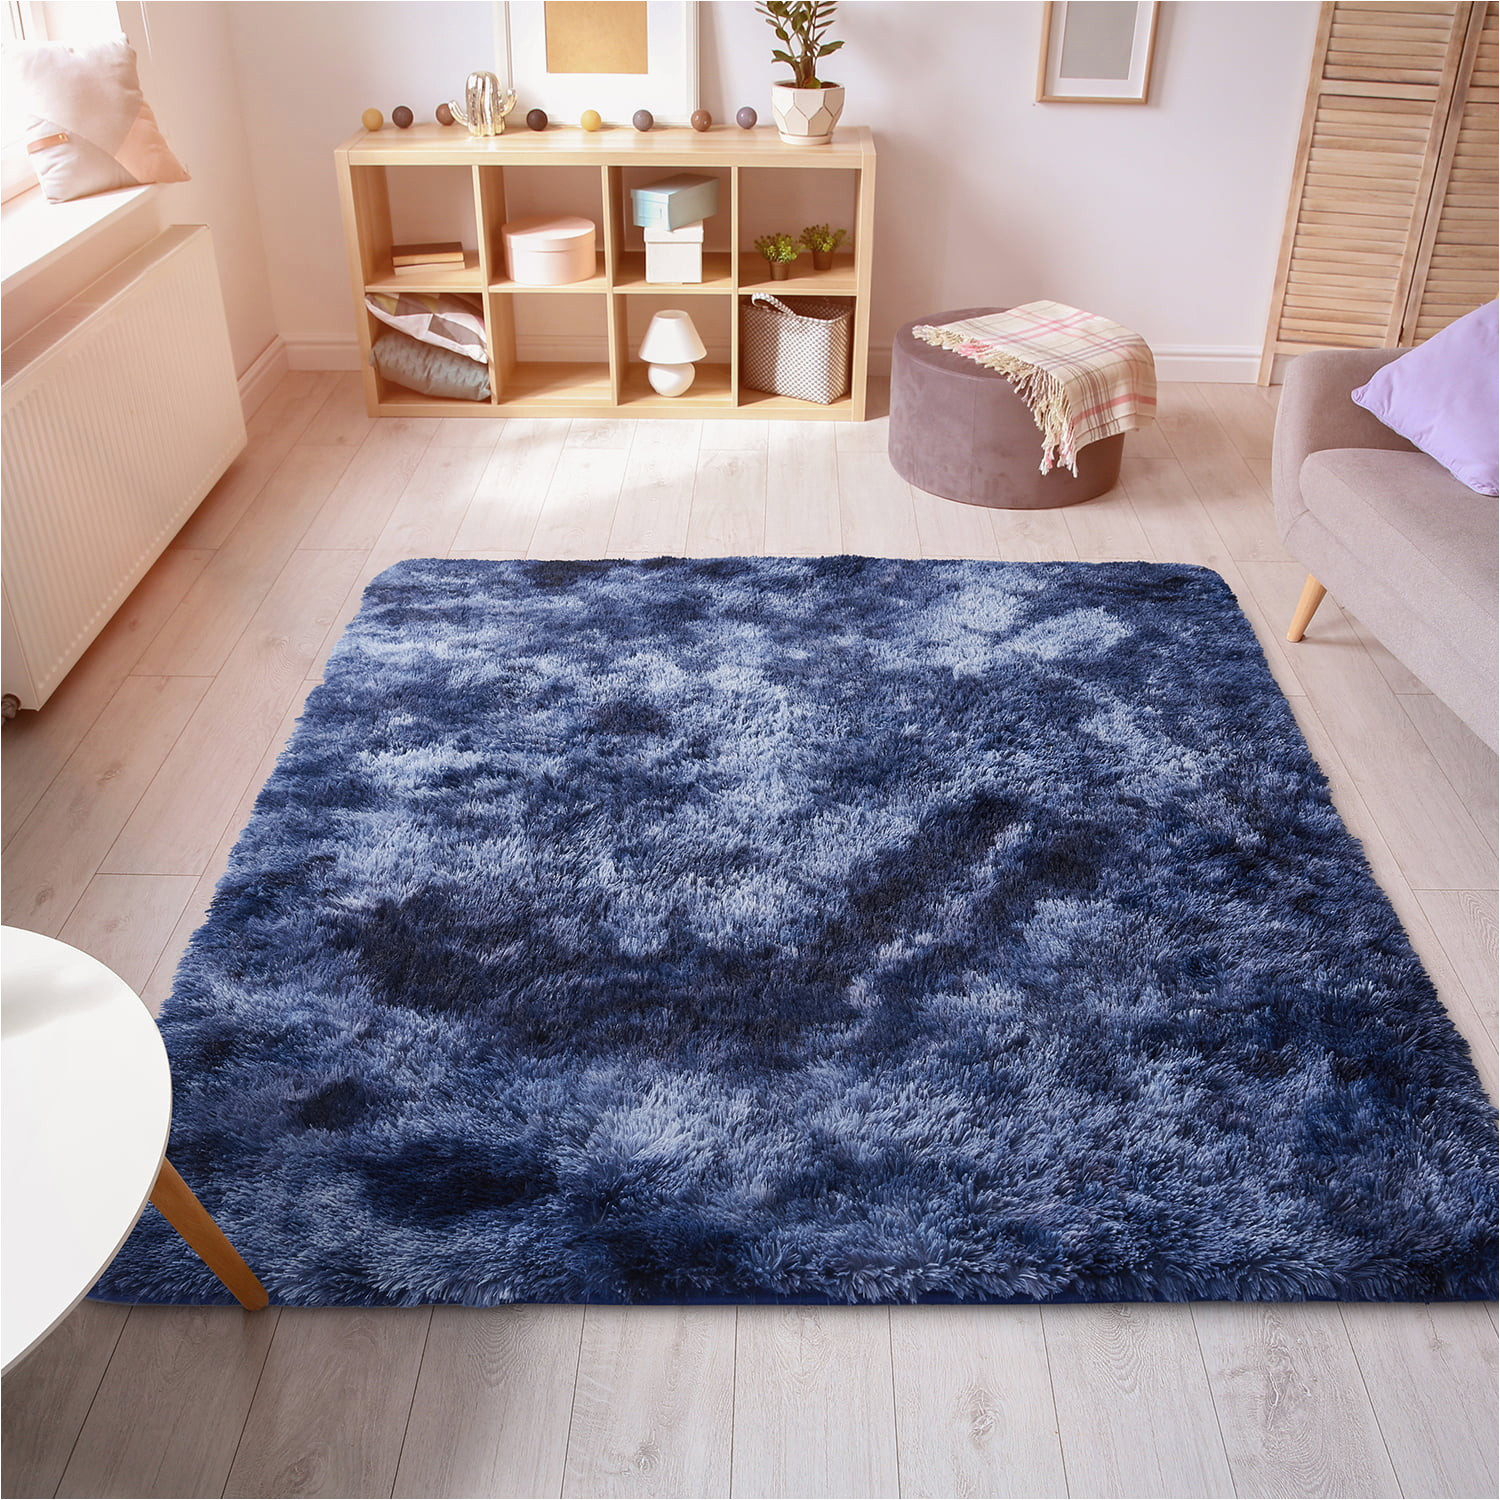 Navy Blue area Rug 4×6 soft Plush Faux Fur area Rug 4×6 Feet, Luxury Modern Rugs Rectangular Fuzzy Carpet for Bedroom, Living Room, Kids Room, Navy